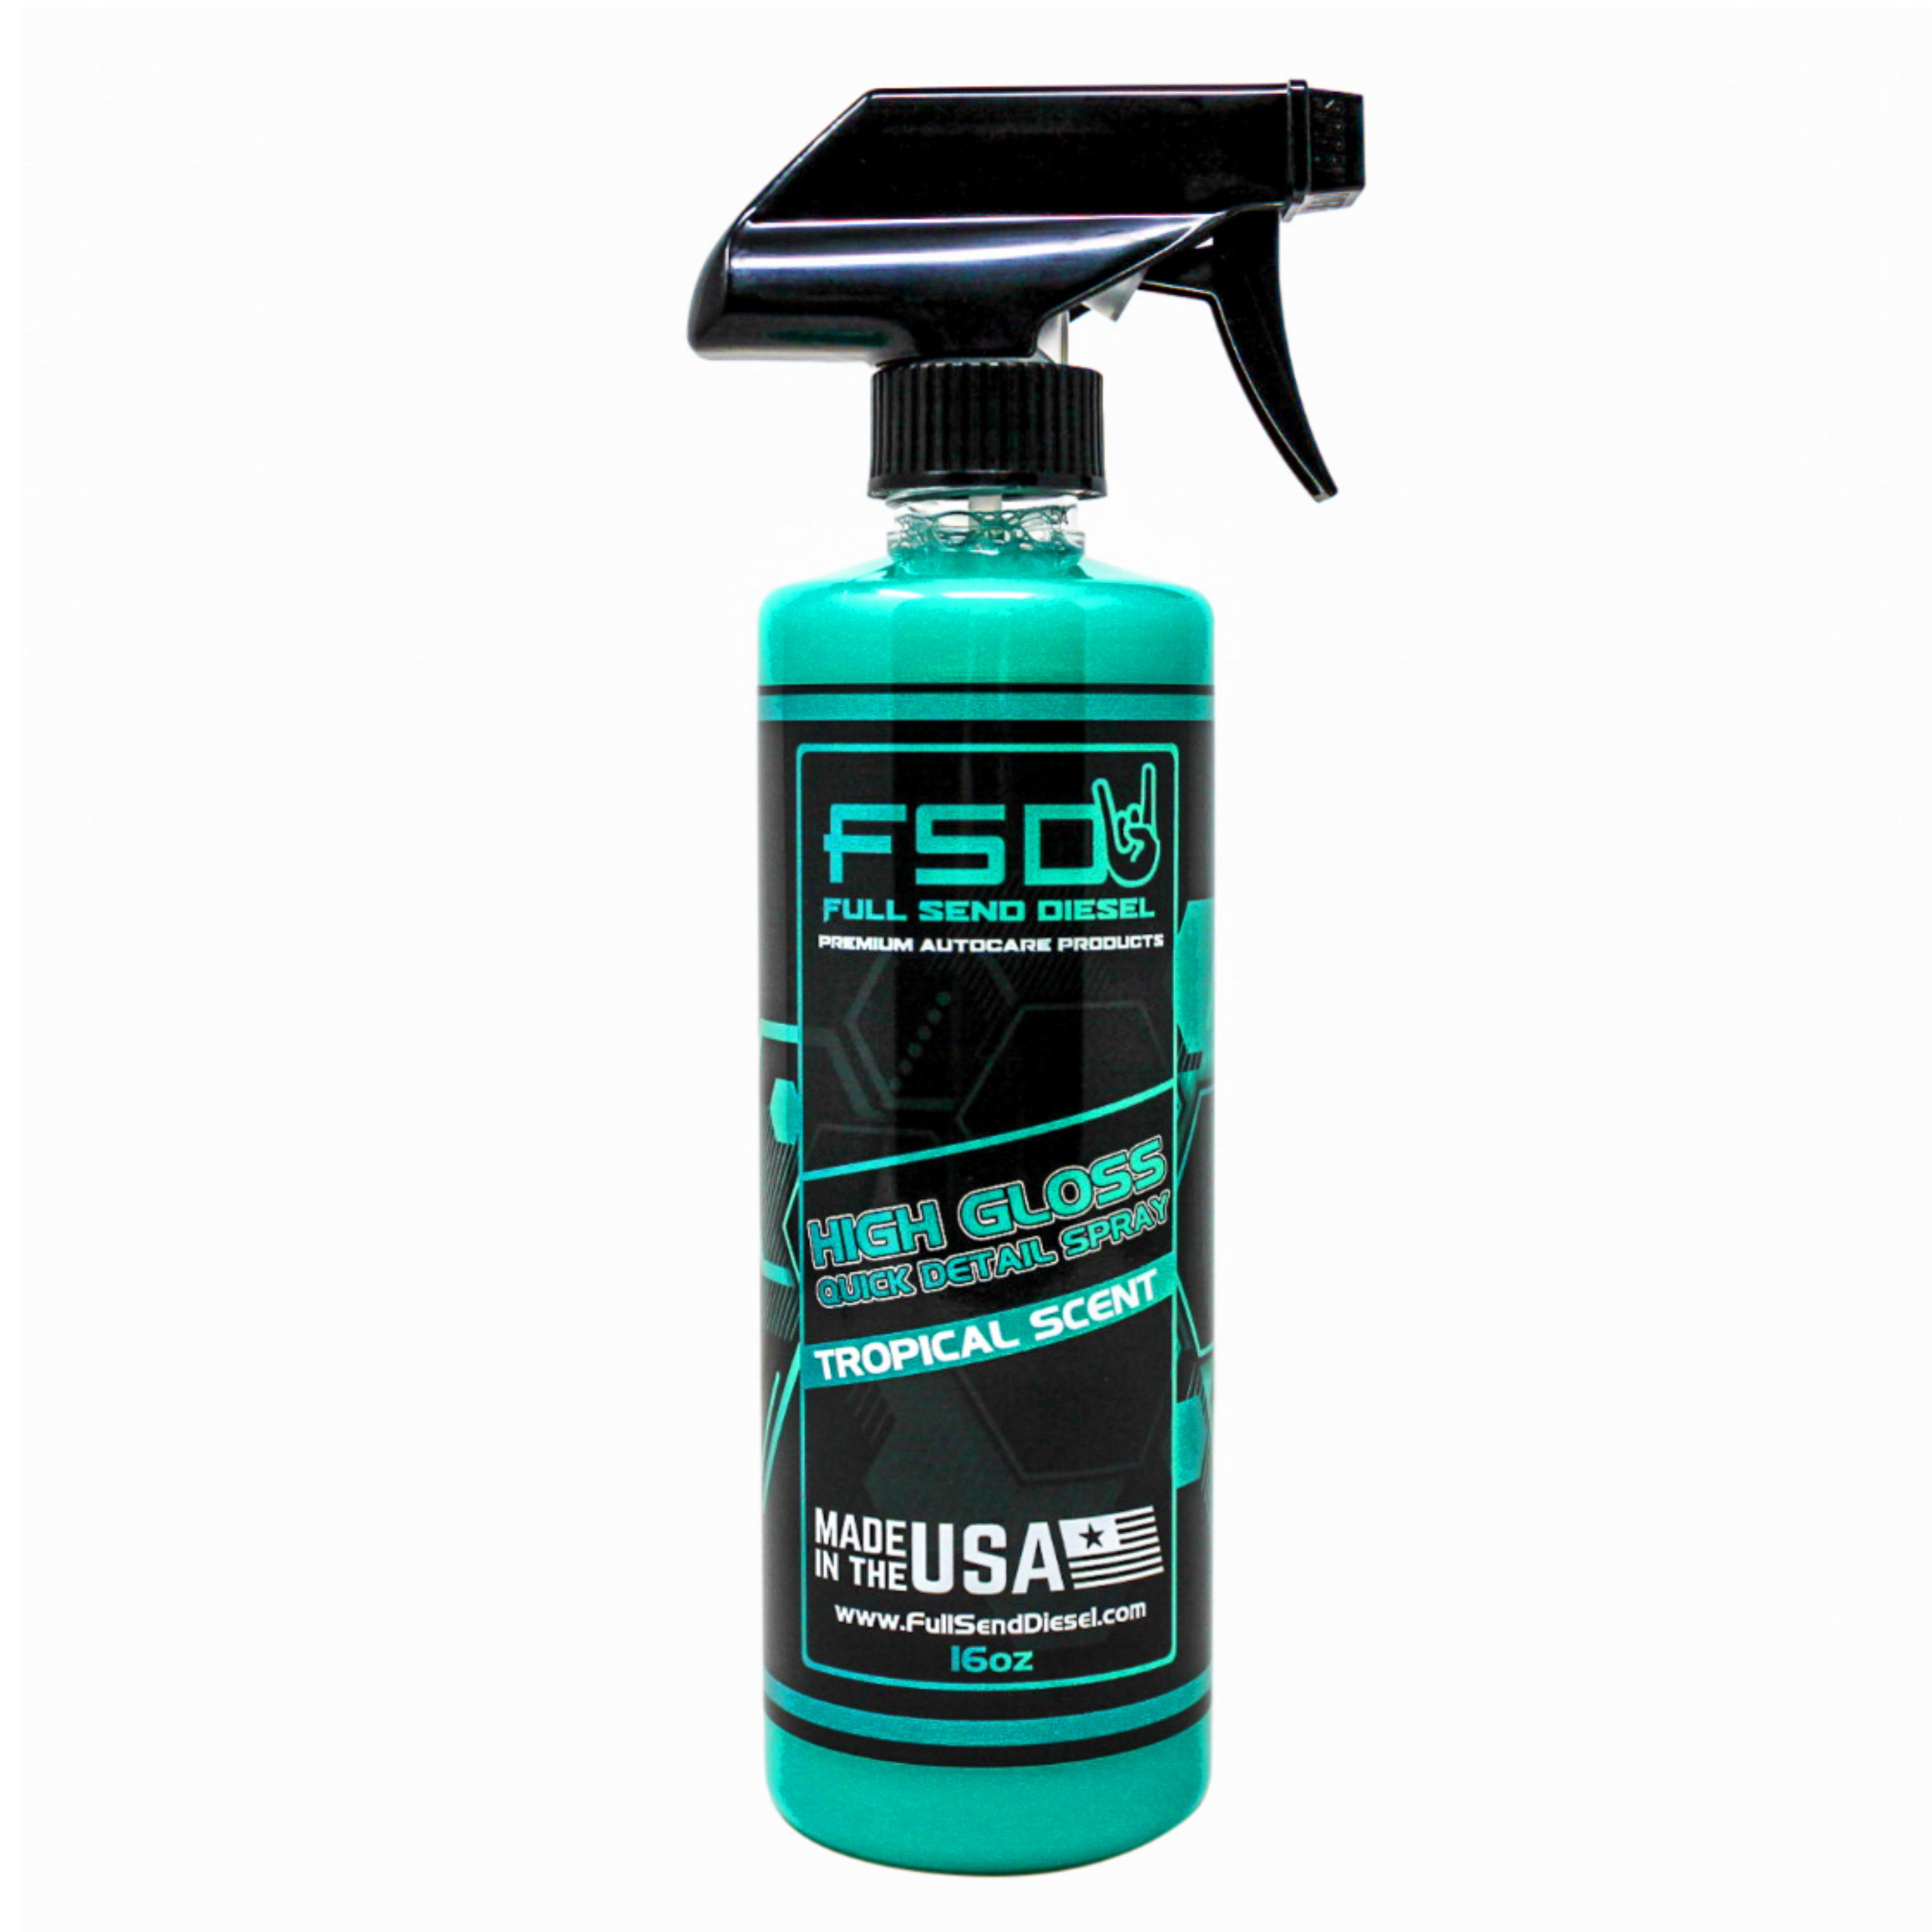 FSD High Gloss Quick Detail Spray – Full Send Diesel